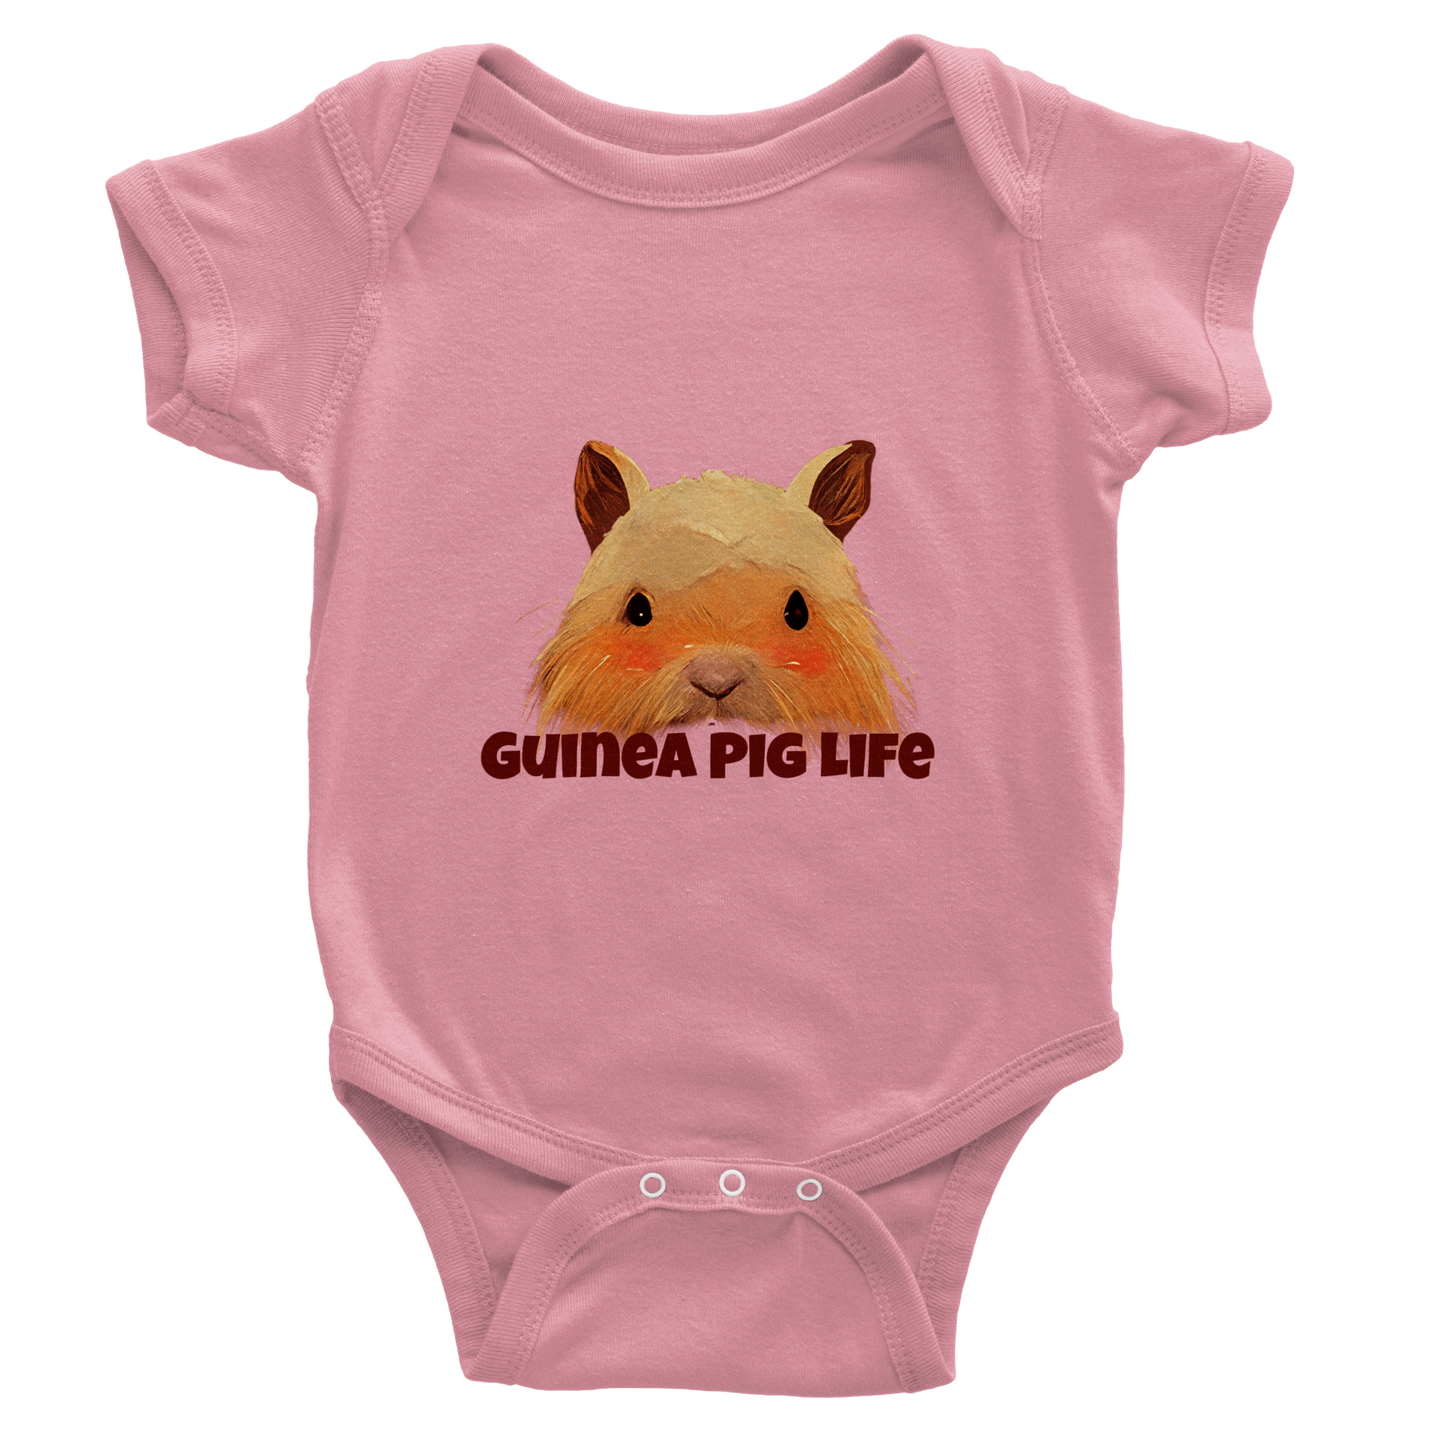 Pink short sleeve baby onesie with cute Guinea Pig life print